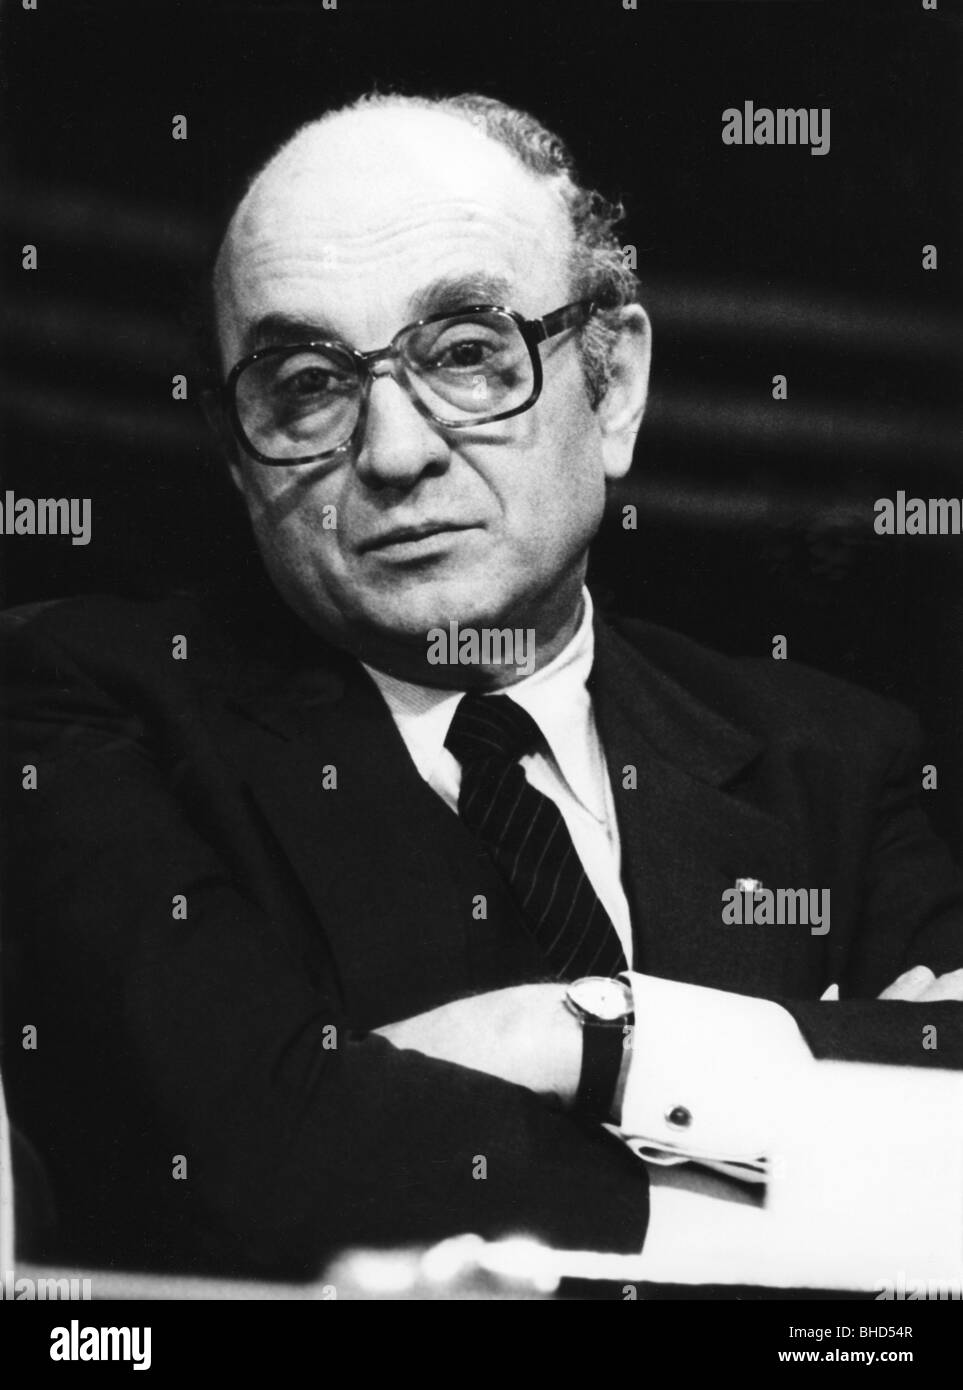 Lambsdorff, Otto Graf von, 20.12.1926 - 5.12.2009, German politician (FDP), portrait, at a party meeting, Stuttgart, Germany, January 1985, Stock Photo